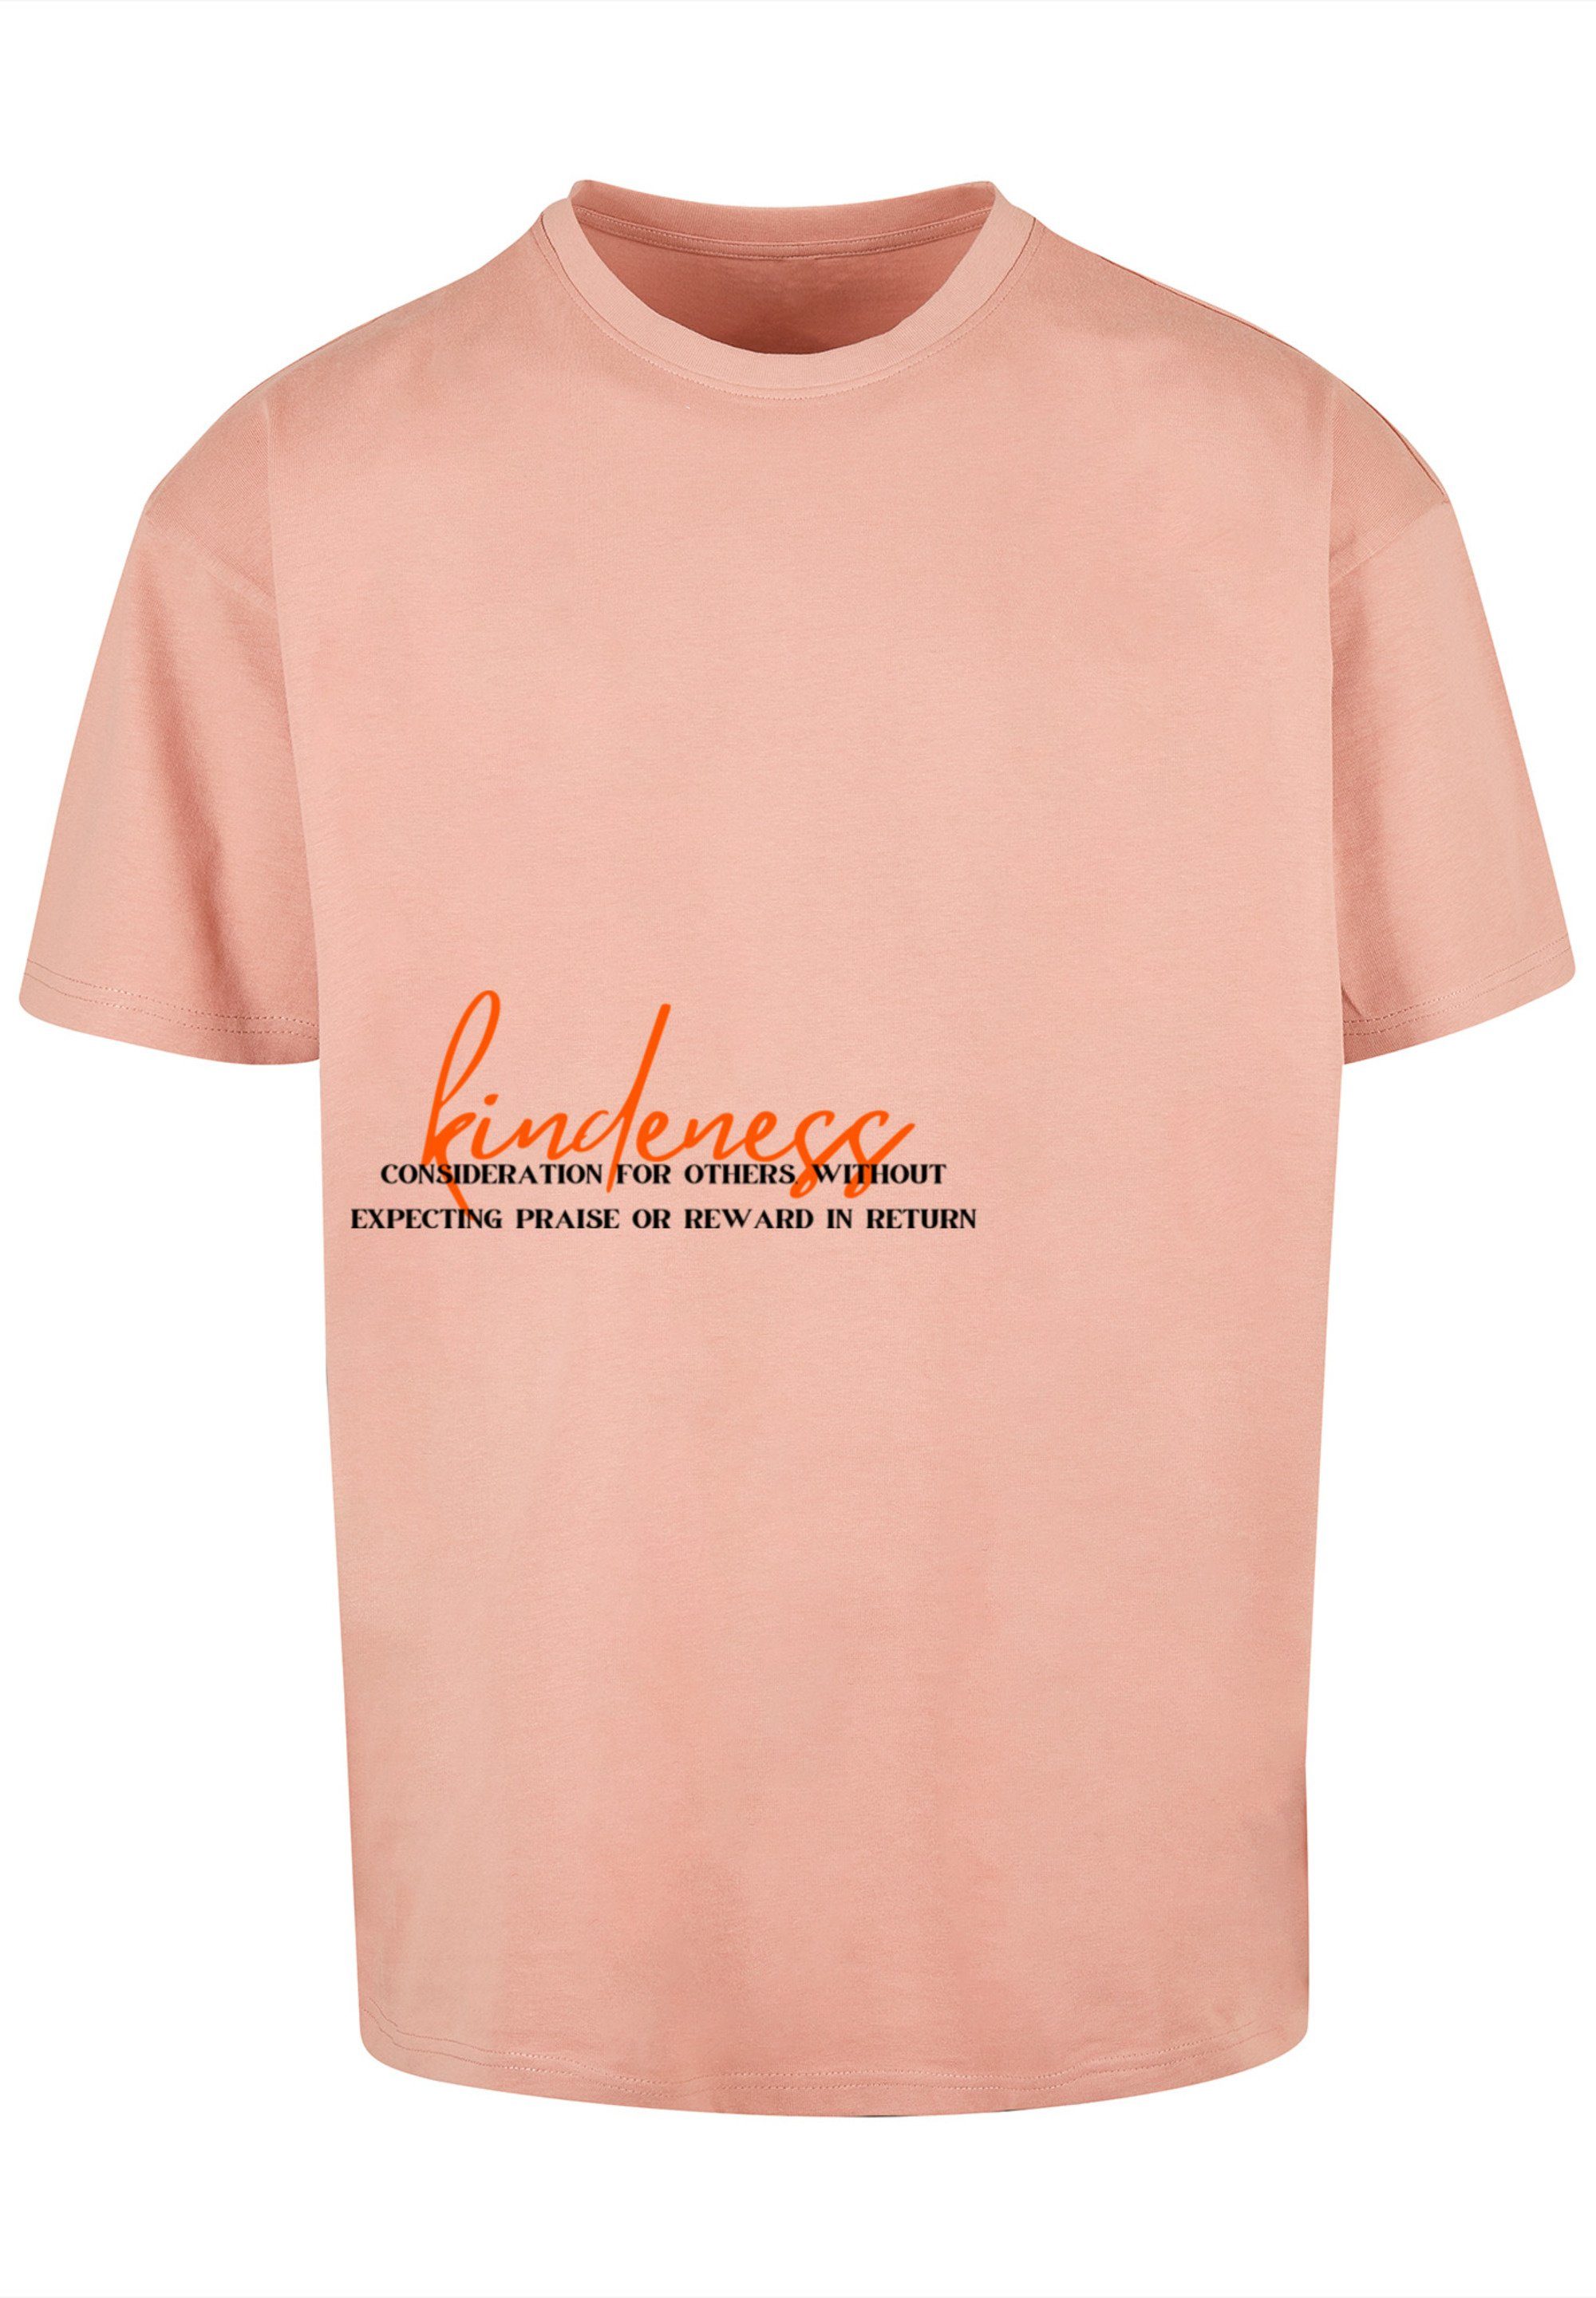 F4NT4STIC T-Shirt kindness Print OVERSIZE amber TEE